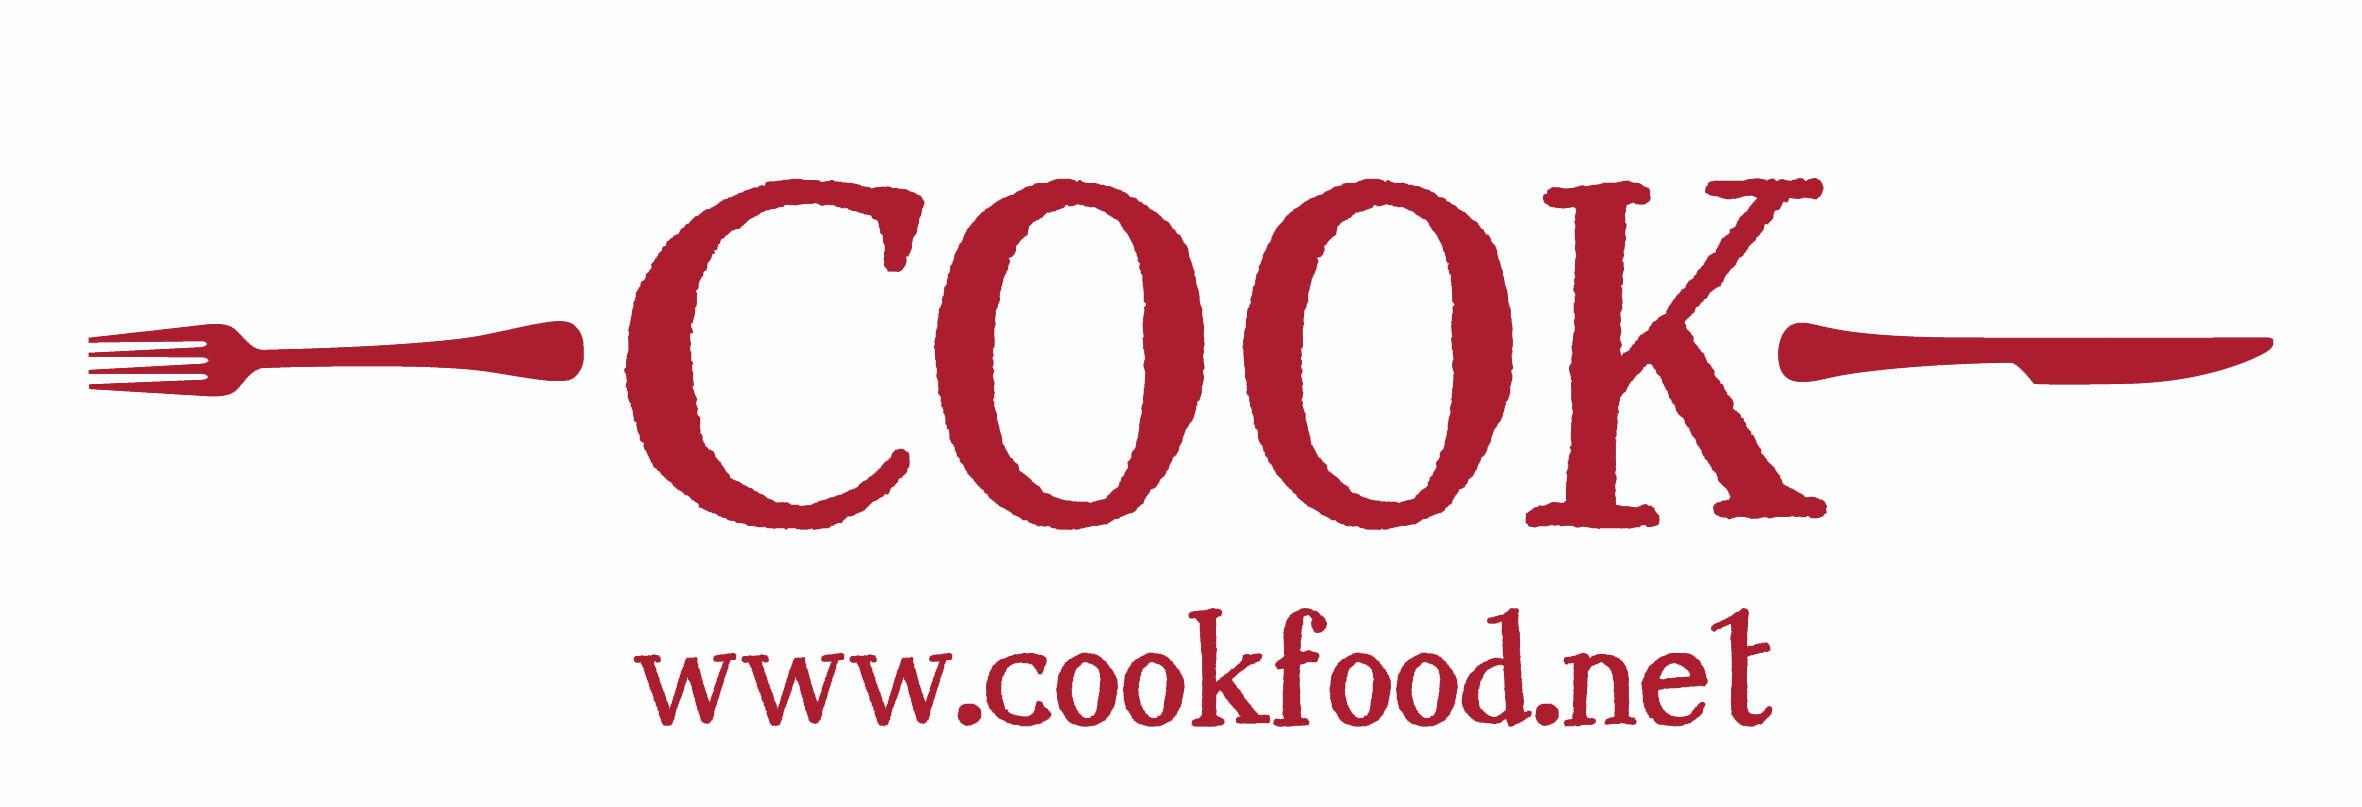 Red Food Logo - Cook Food Logo